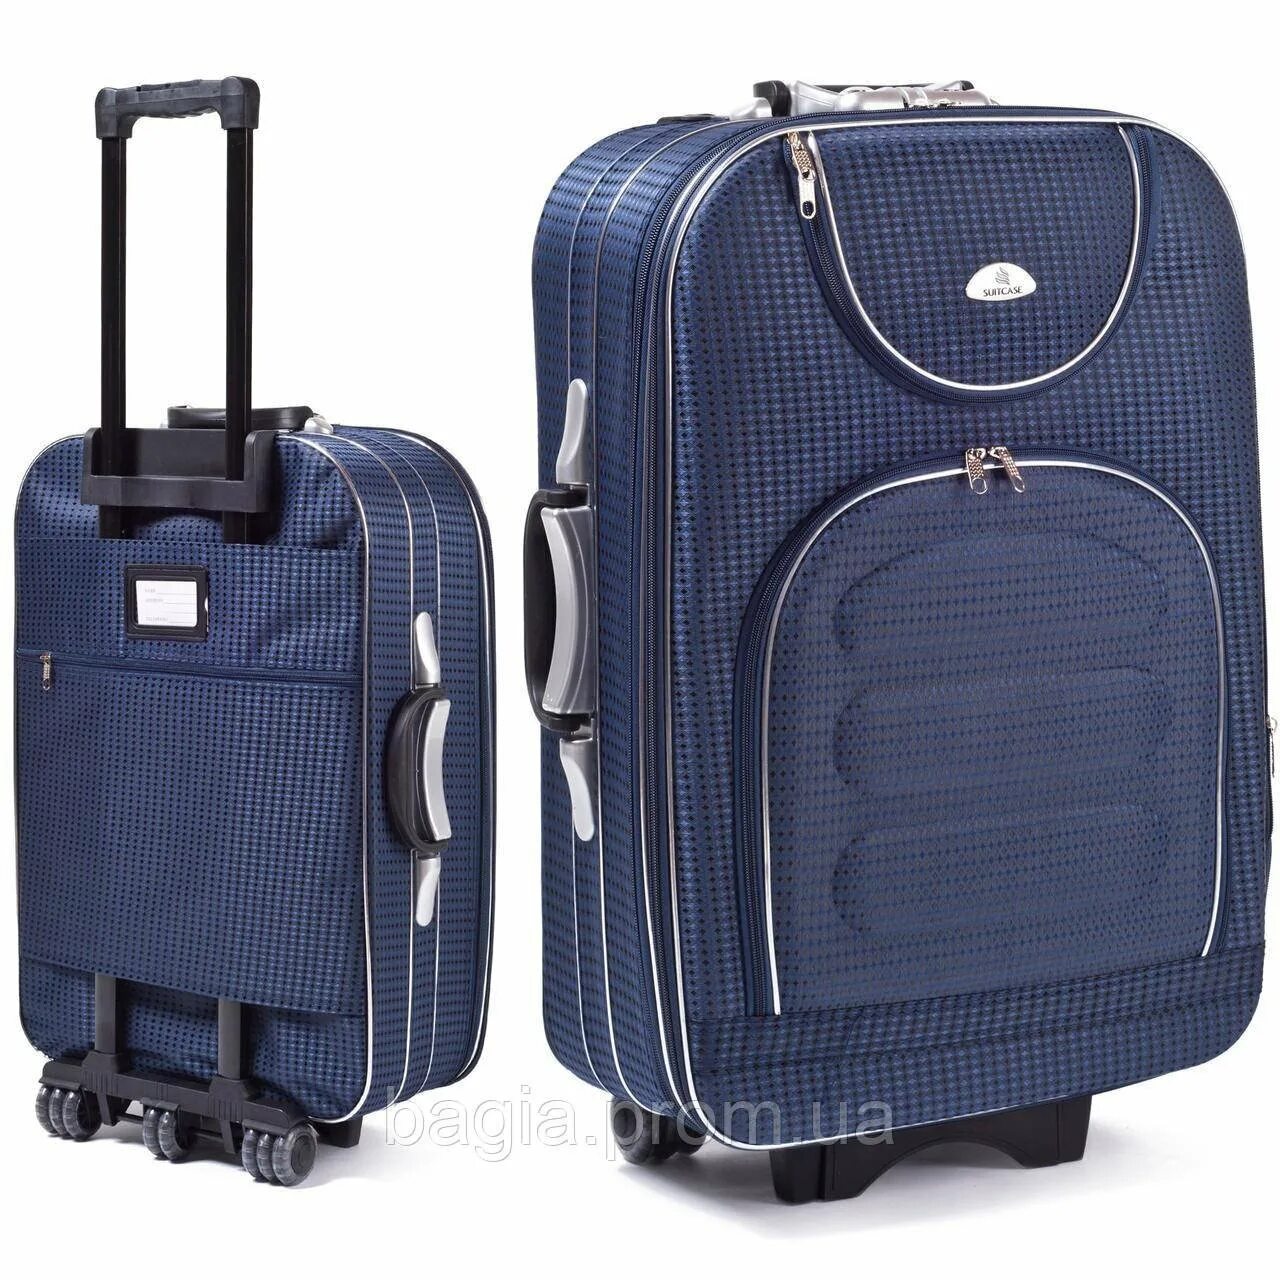 Alitex чемодан. Компактный чемодан на колёсах BRAUBERG. Sparco-t чемодан на колесах. Tardini чемодан на колесах карбон. Купить чемодан дорогой